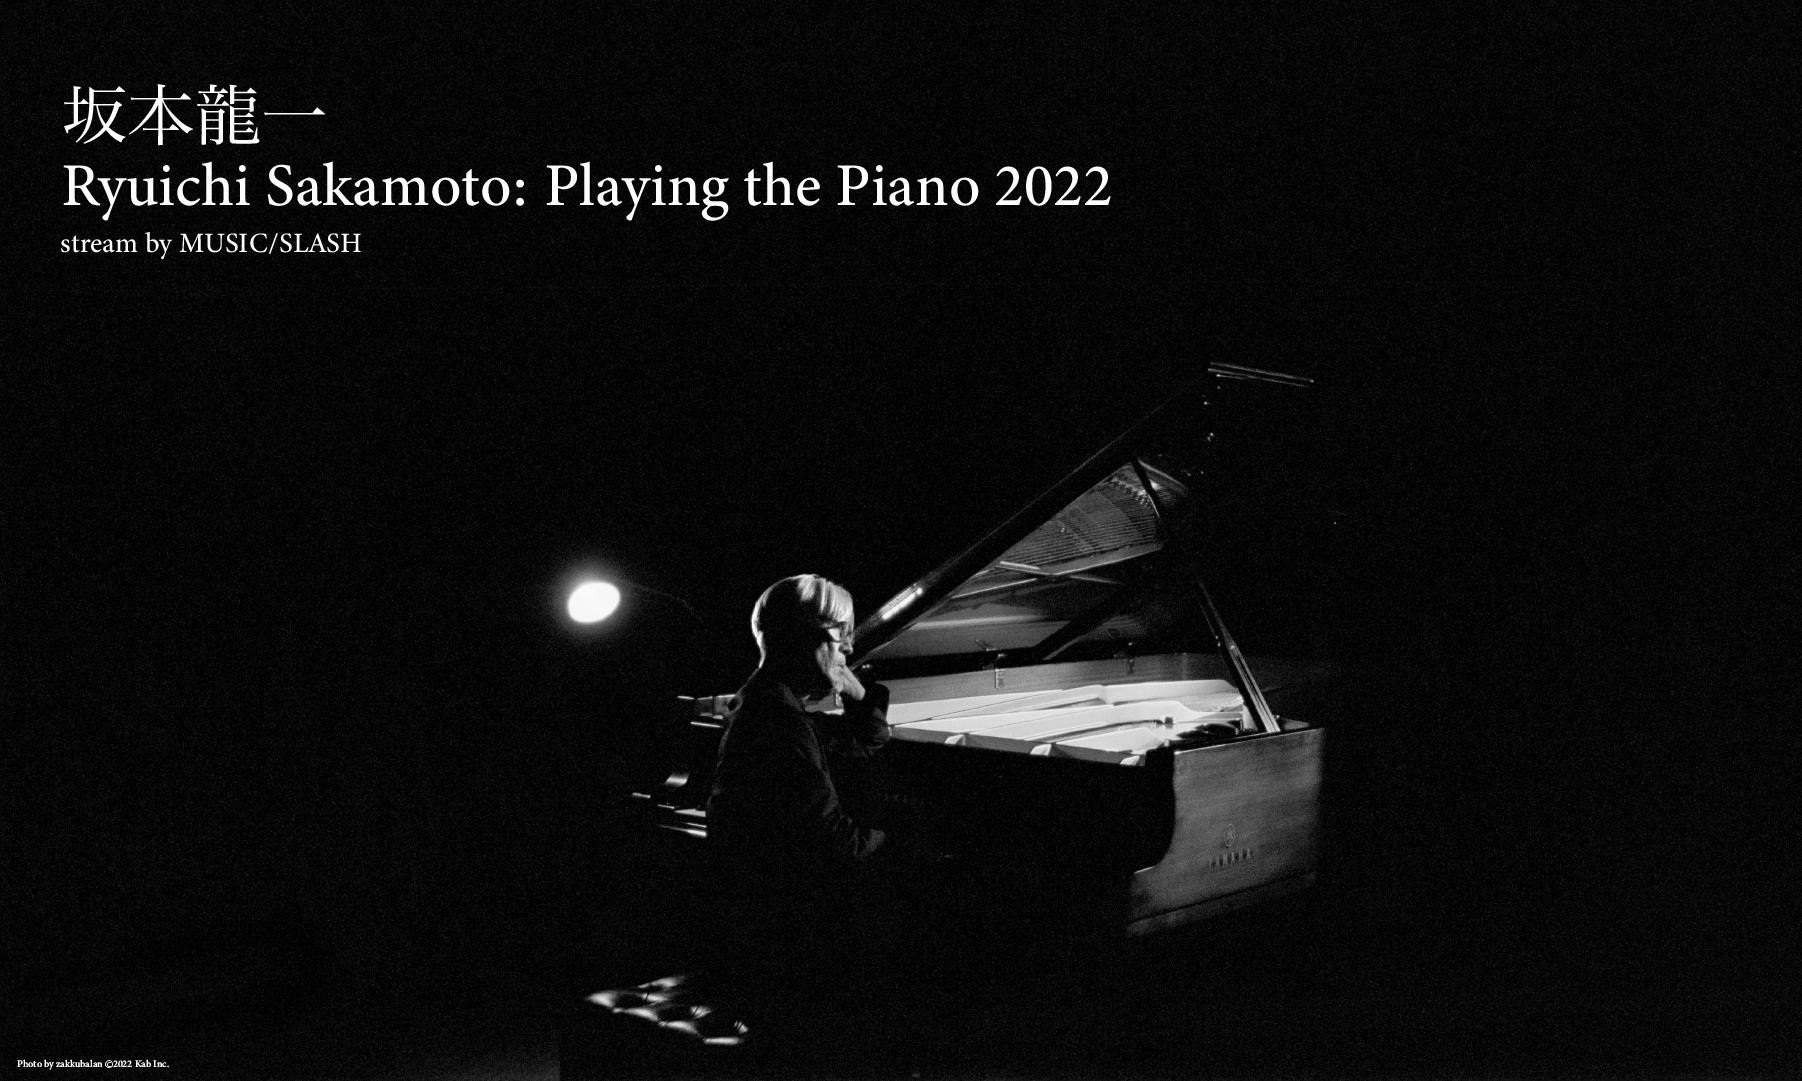 坂本龙一将举行「Ryuichi Sakamoto: Playing the Piano 2022」钢琴演奏会